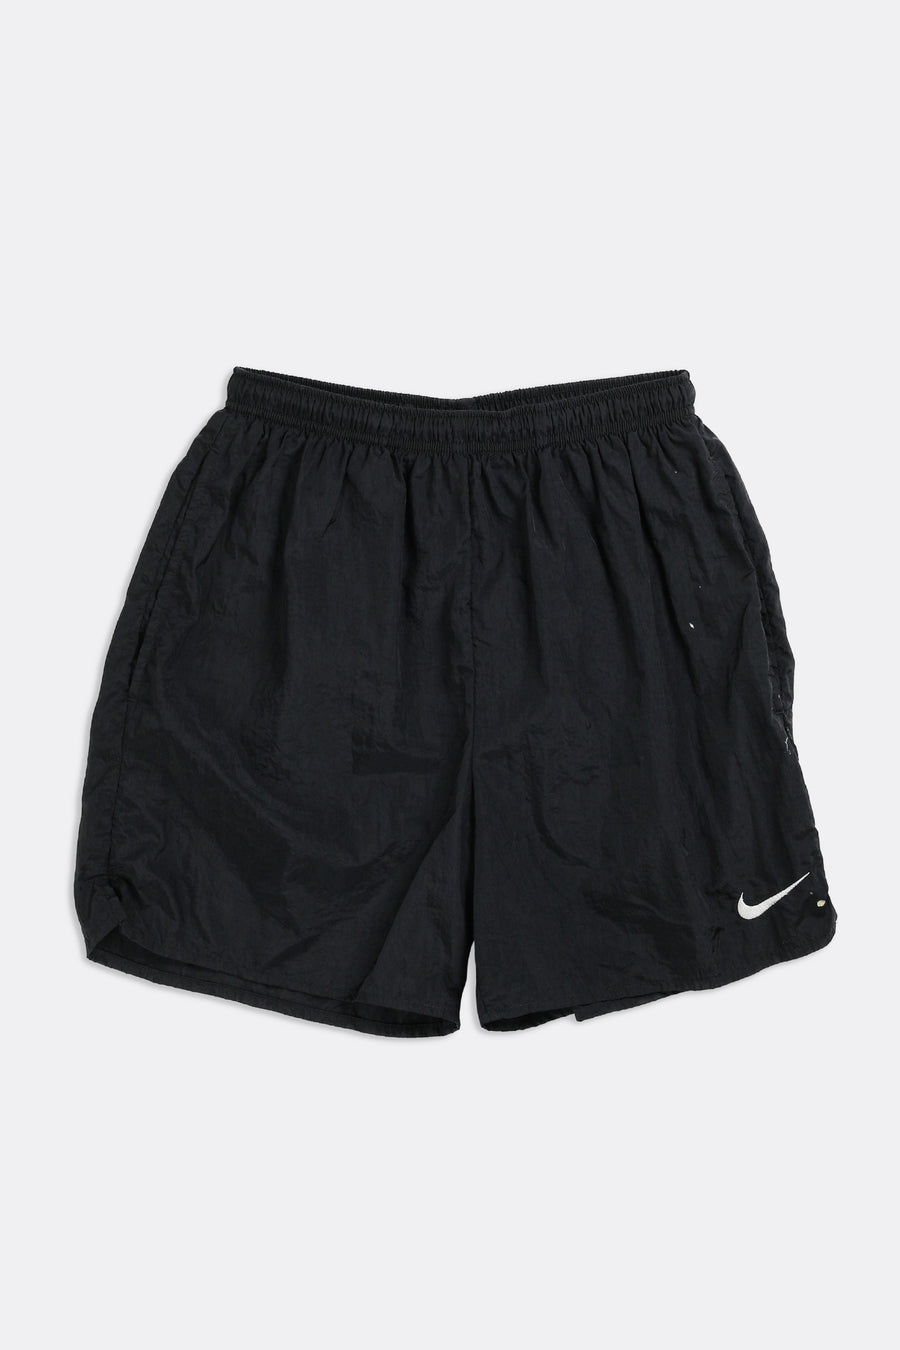 Vintage Nike Windbreaker Shorts - S